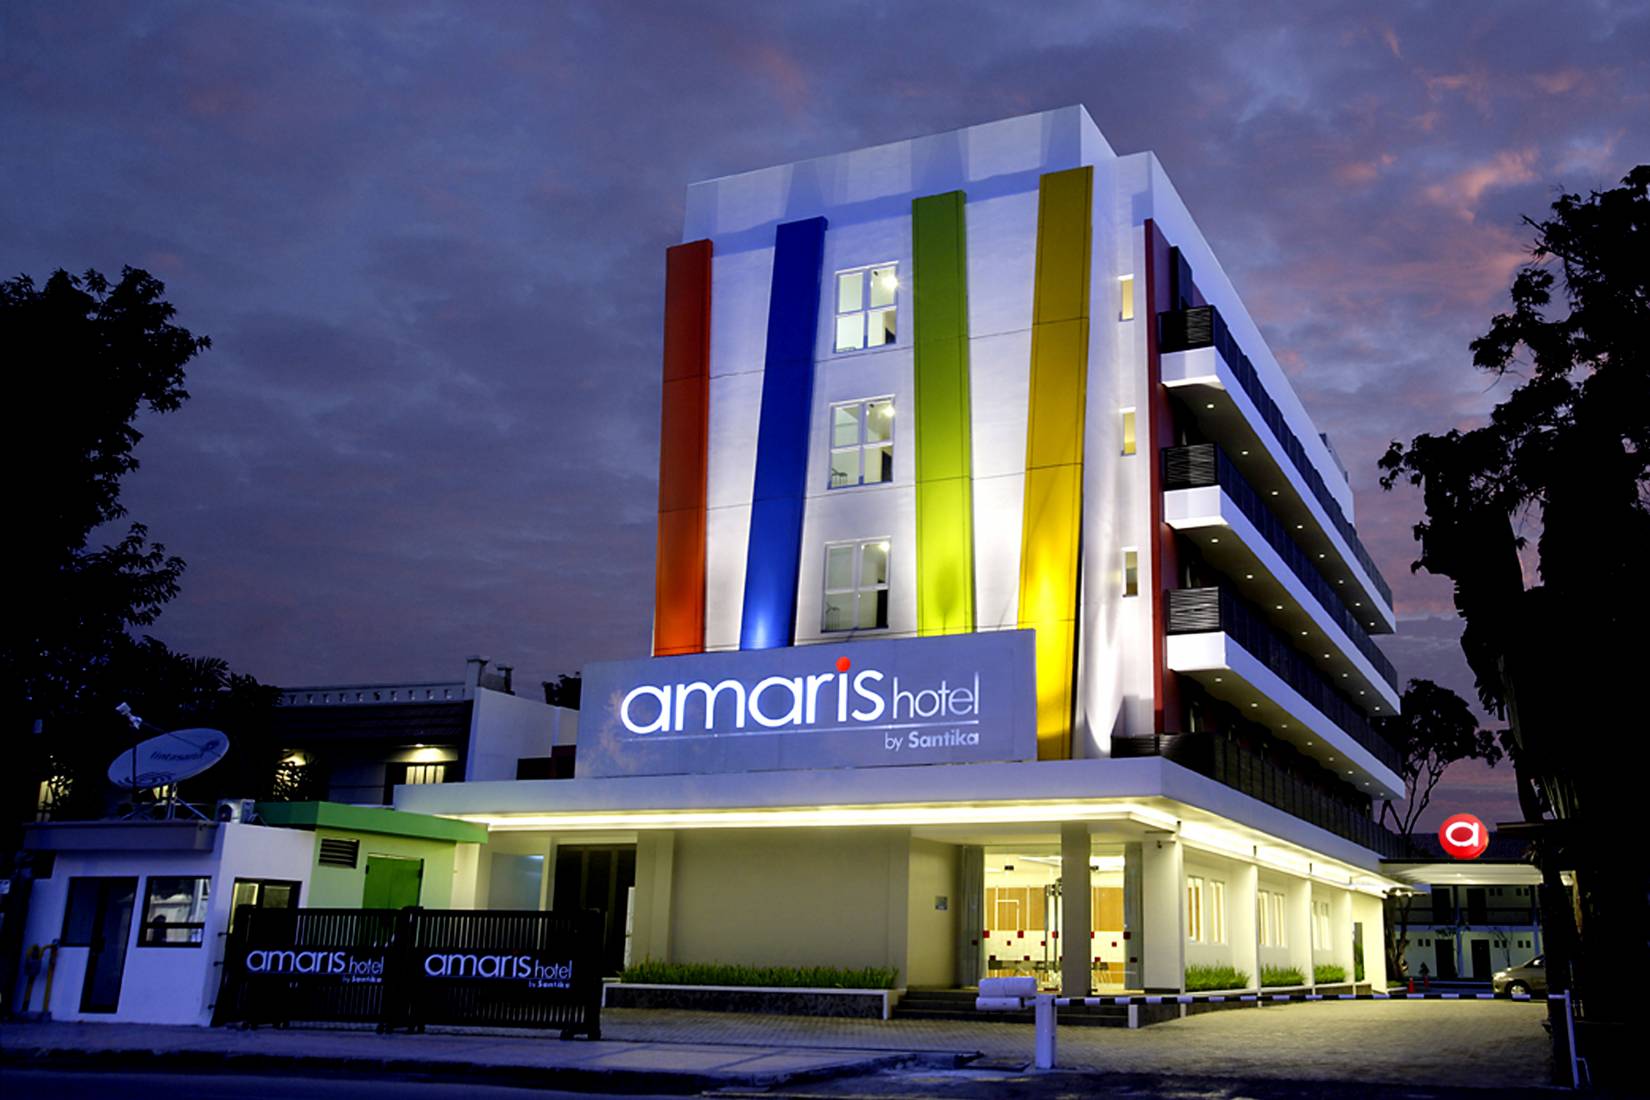 Amaris Hotel Cirebon Official Amaris Hotel Website